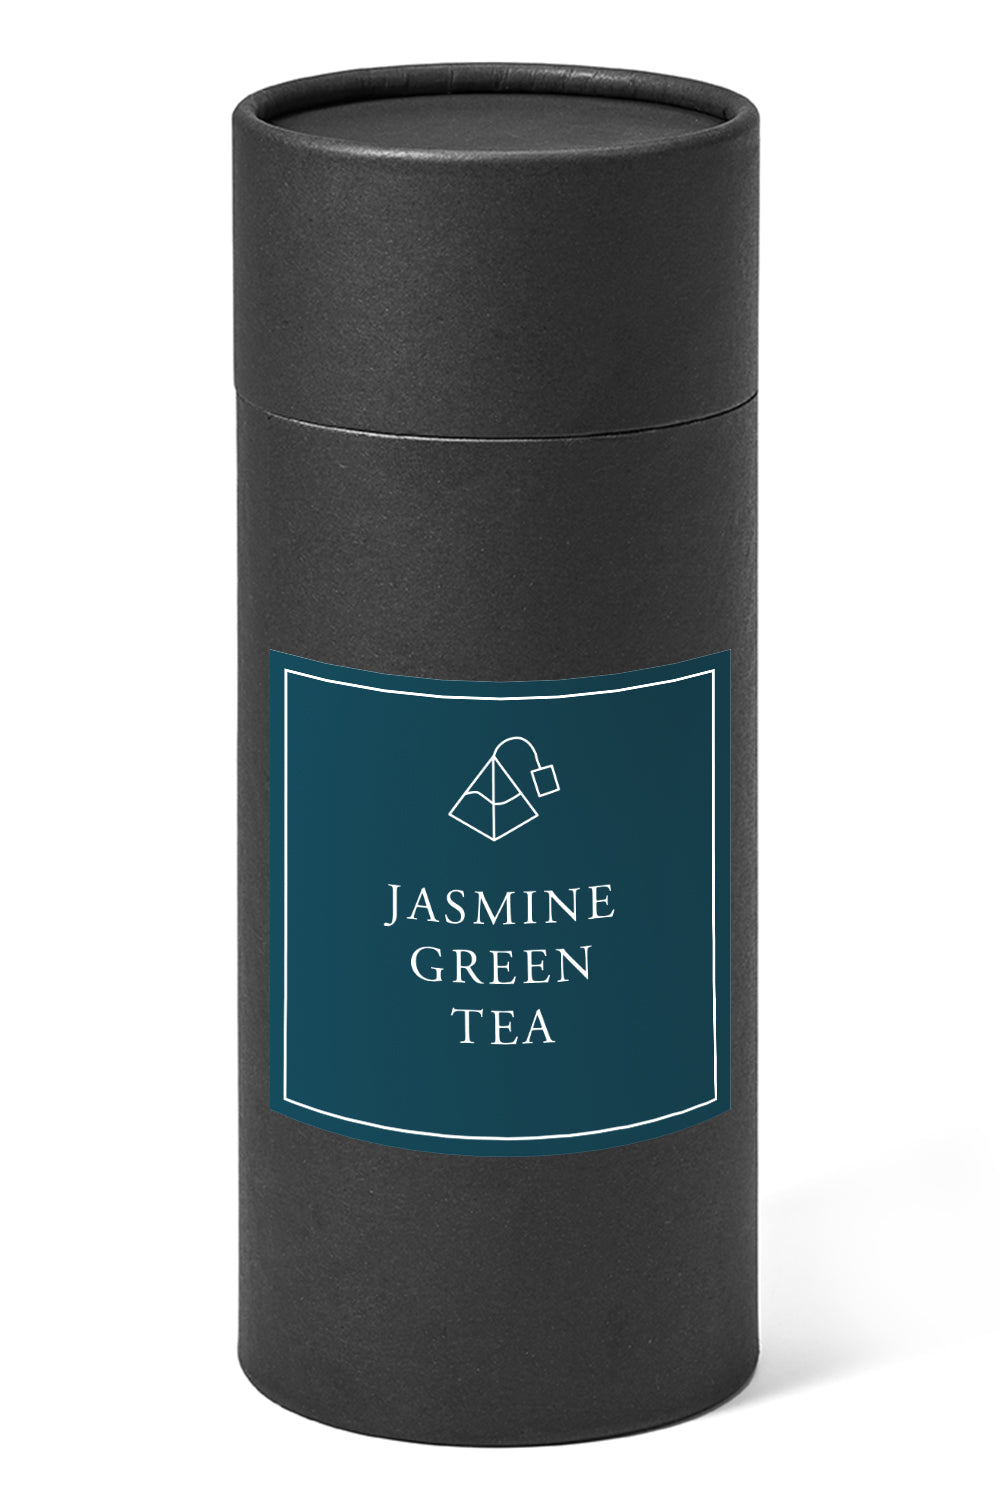 Jasmine Green Tea (Pyramid Bags)-40 pyramids gift-Loose Leaf Tea-High Teas